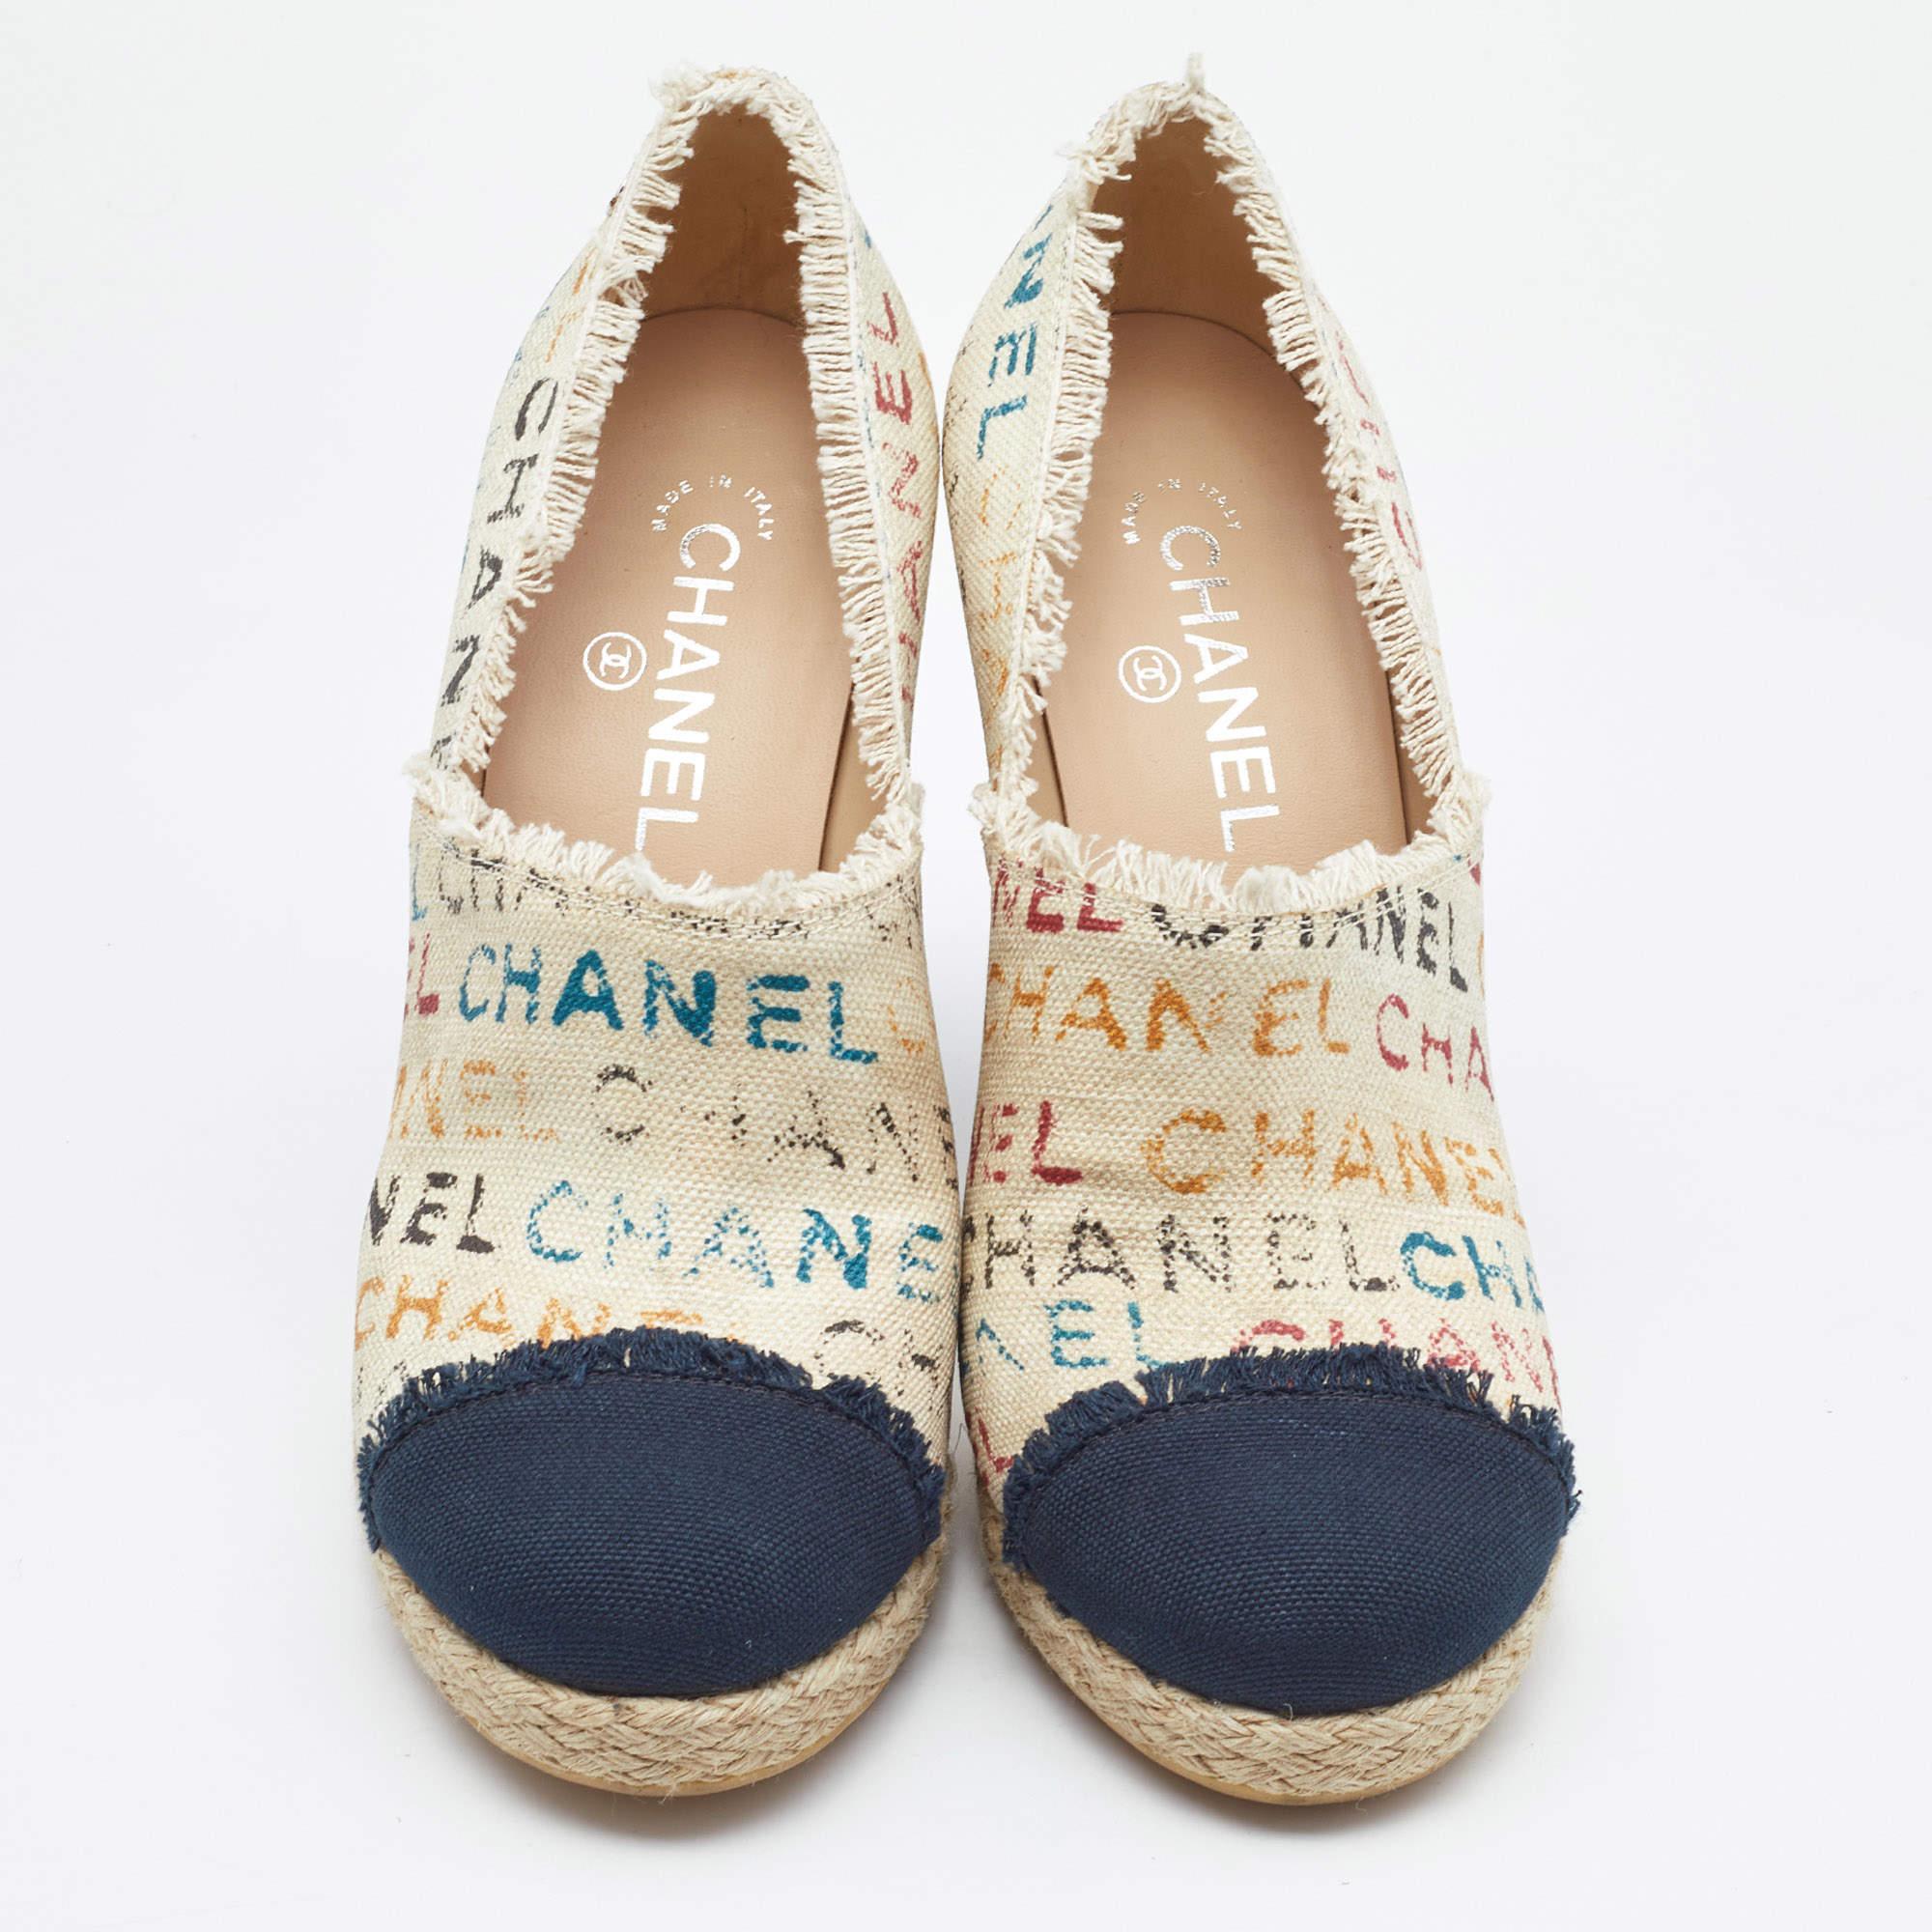 Chanel Espadrilles Sandals - 3 For Sale on 1stDibs